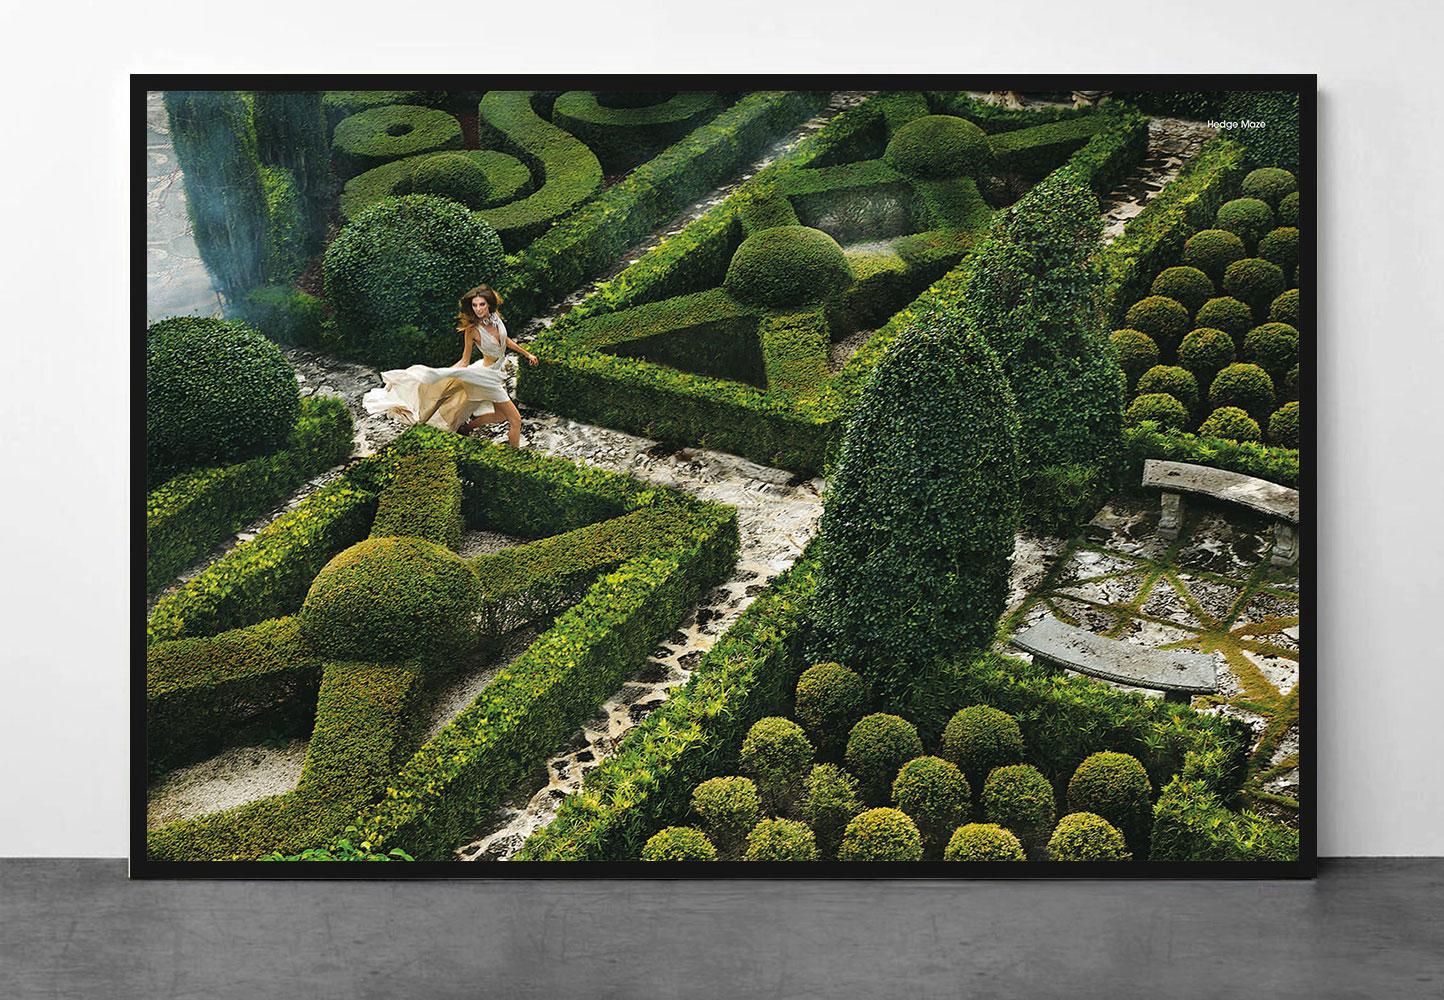 Hedge Maze - Photograph by Greg Lotus